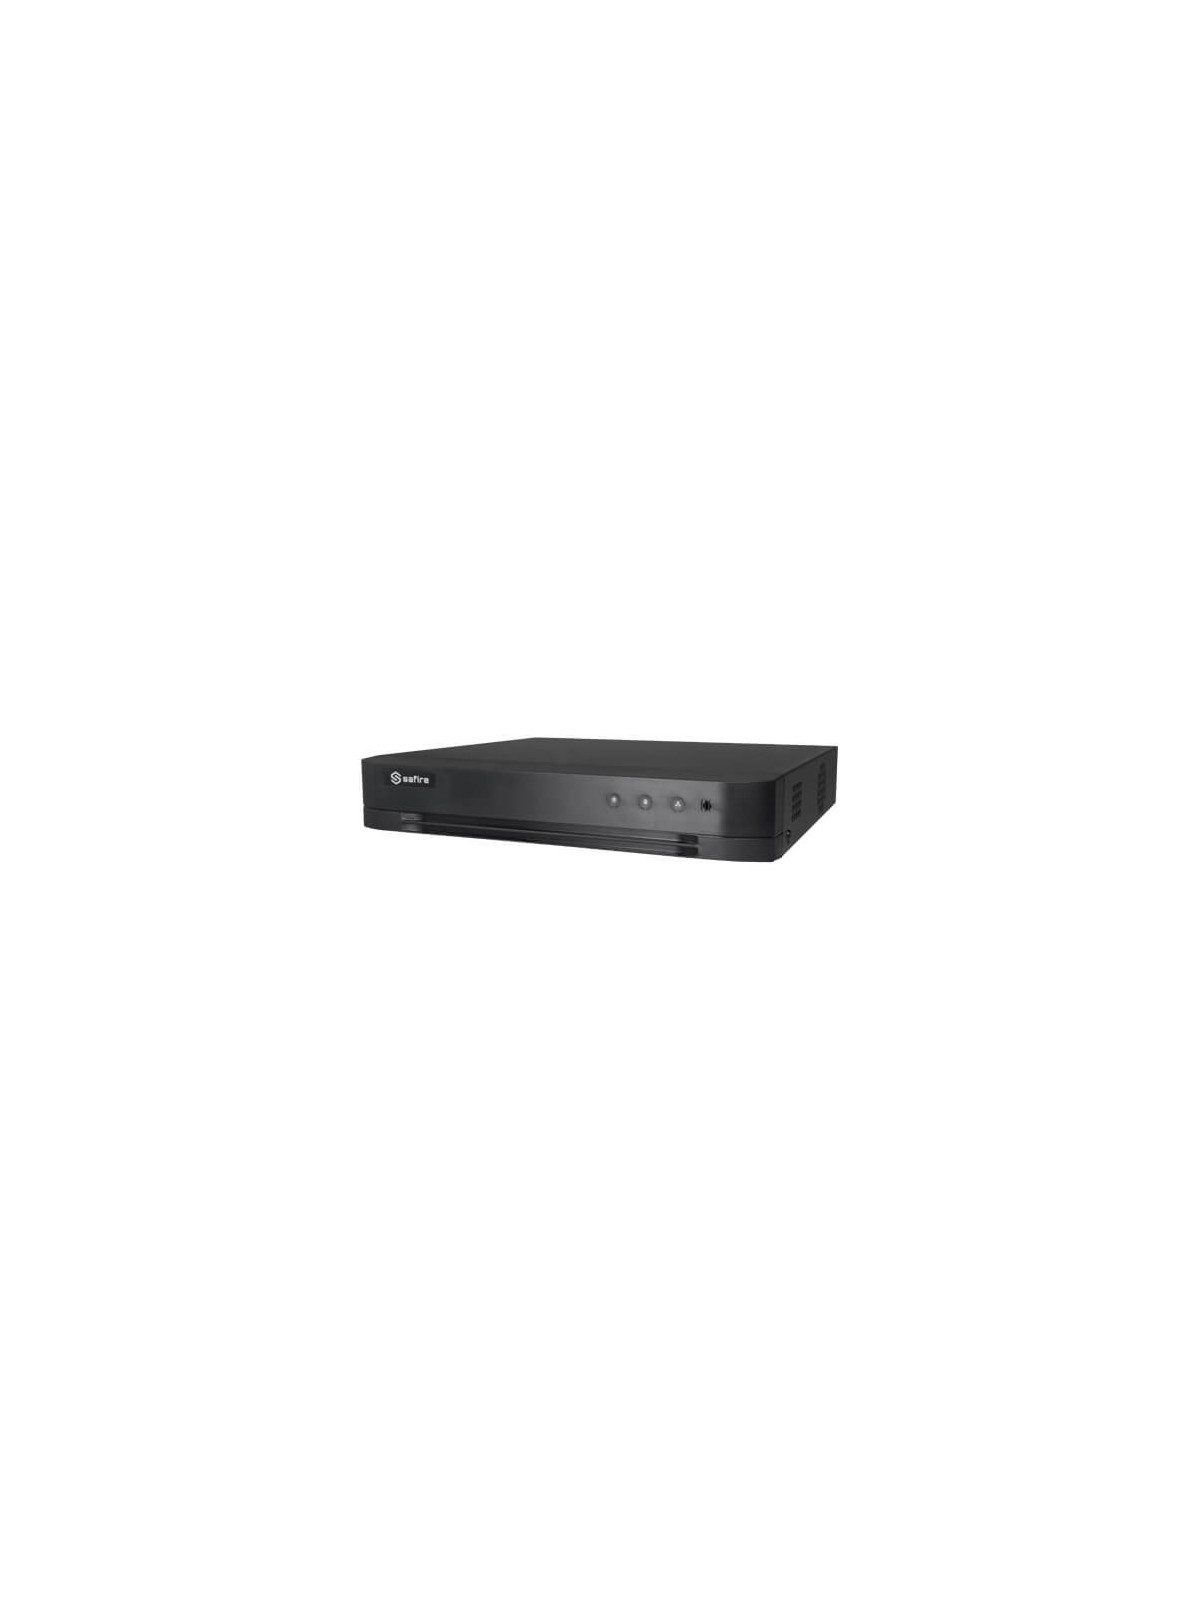 Grabador 5en1 Safire SF-XVR8104S-4KL 4ch Video (8MPLite 32fps) 4ch IP 1ch Audio H265Pro+ HDMI SATAx1